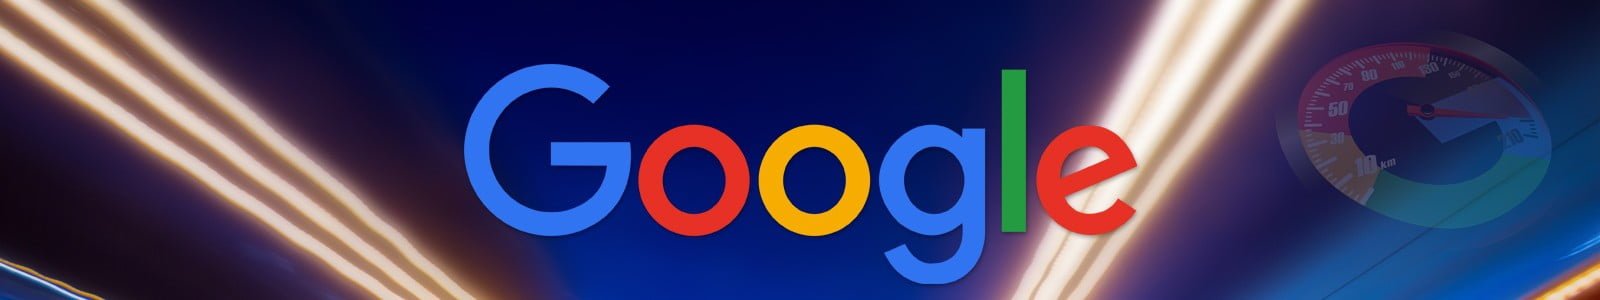 Google PageSpeed Update Ranking